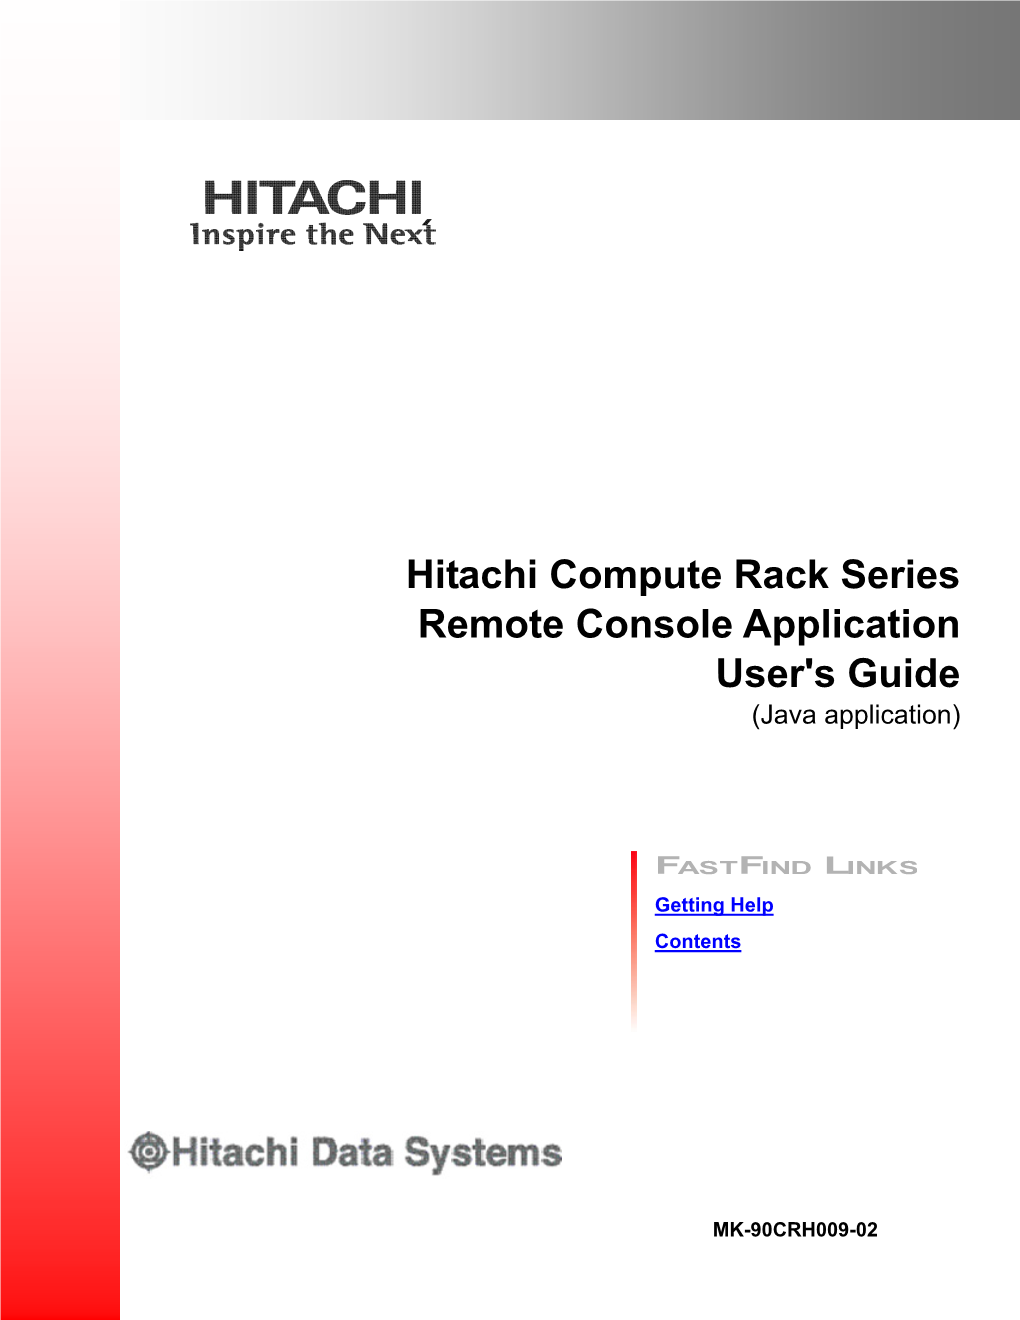 Hitachi Compute Rack Series Remote Console Application User's Guide (Java Application)